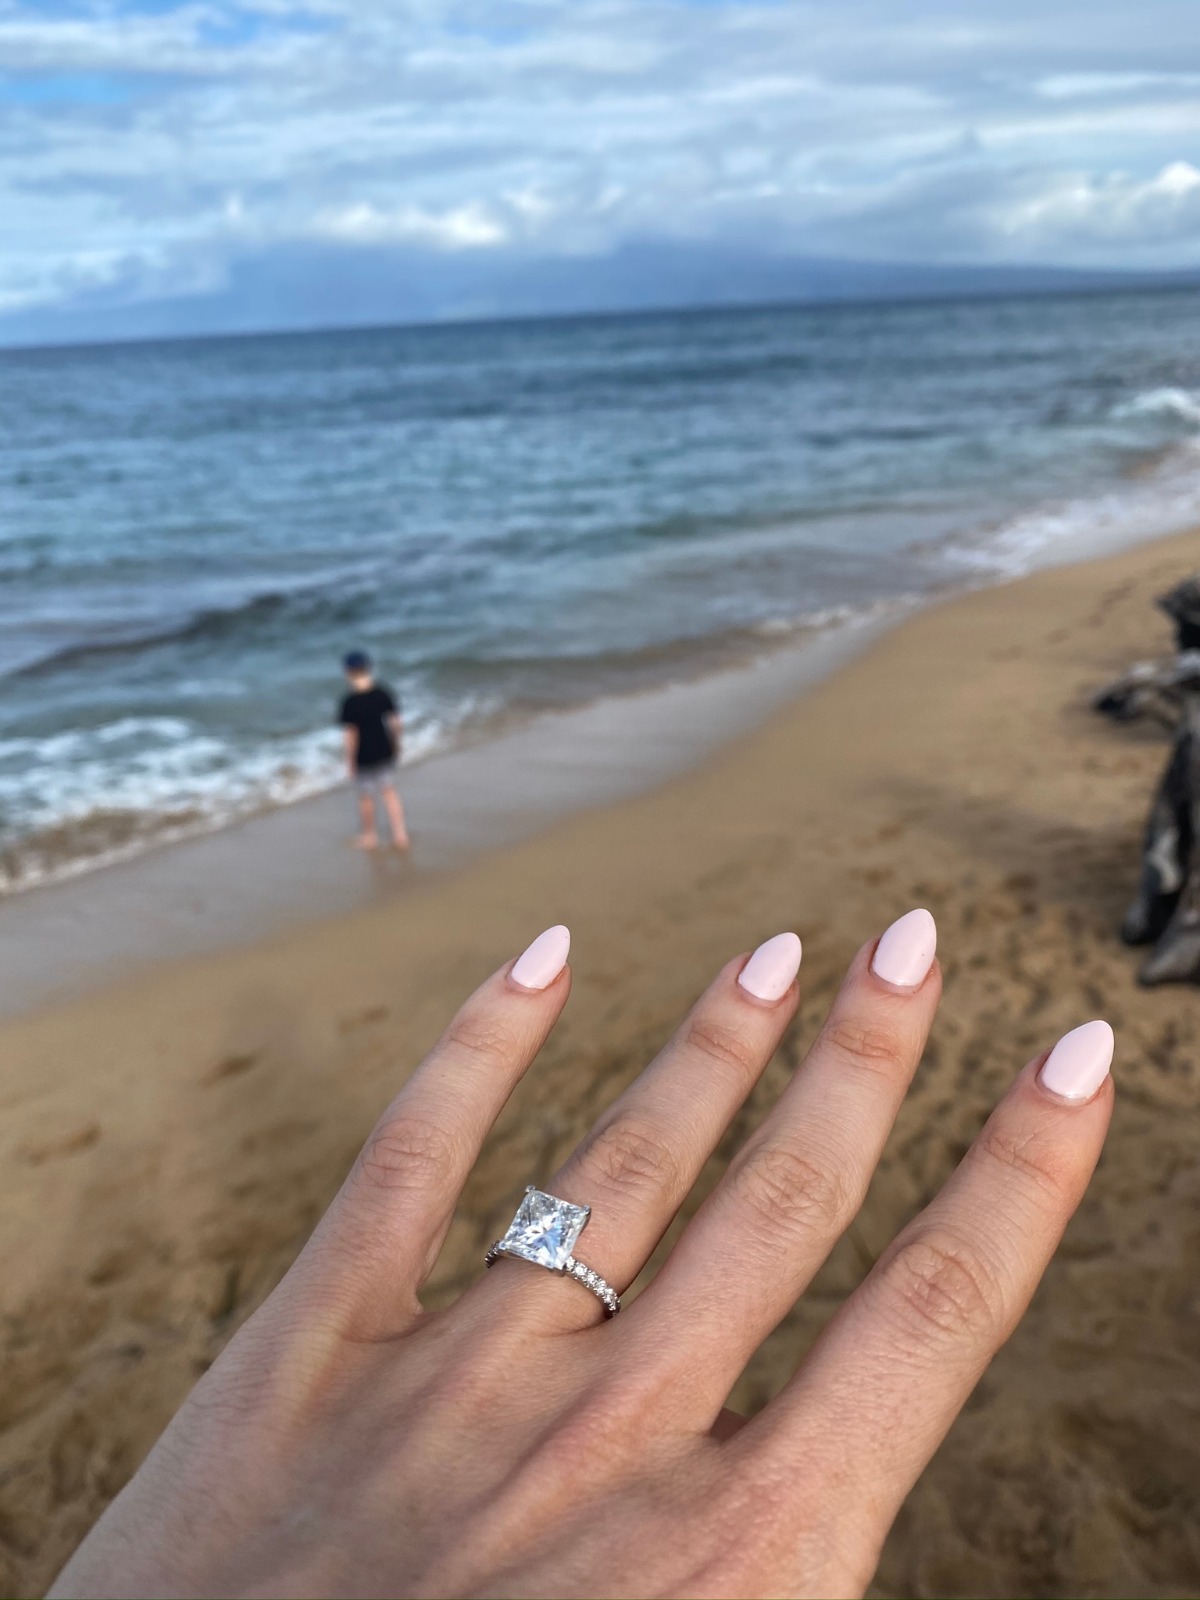 The Bachelor Contestant's Most Extravagant Maui Proposal